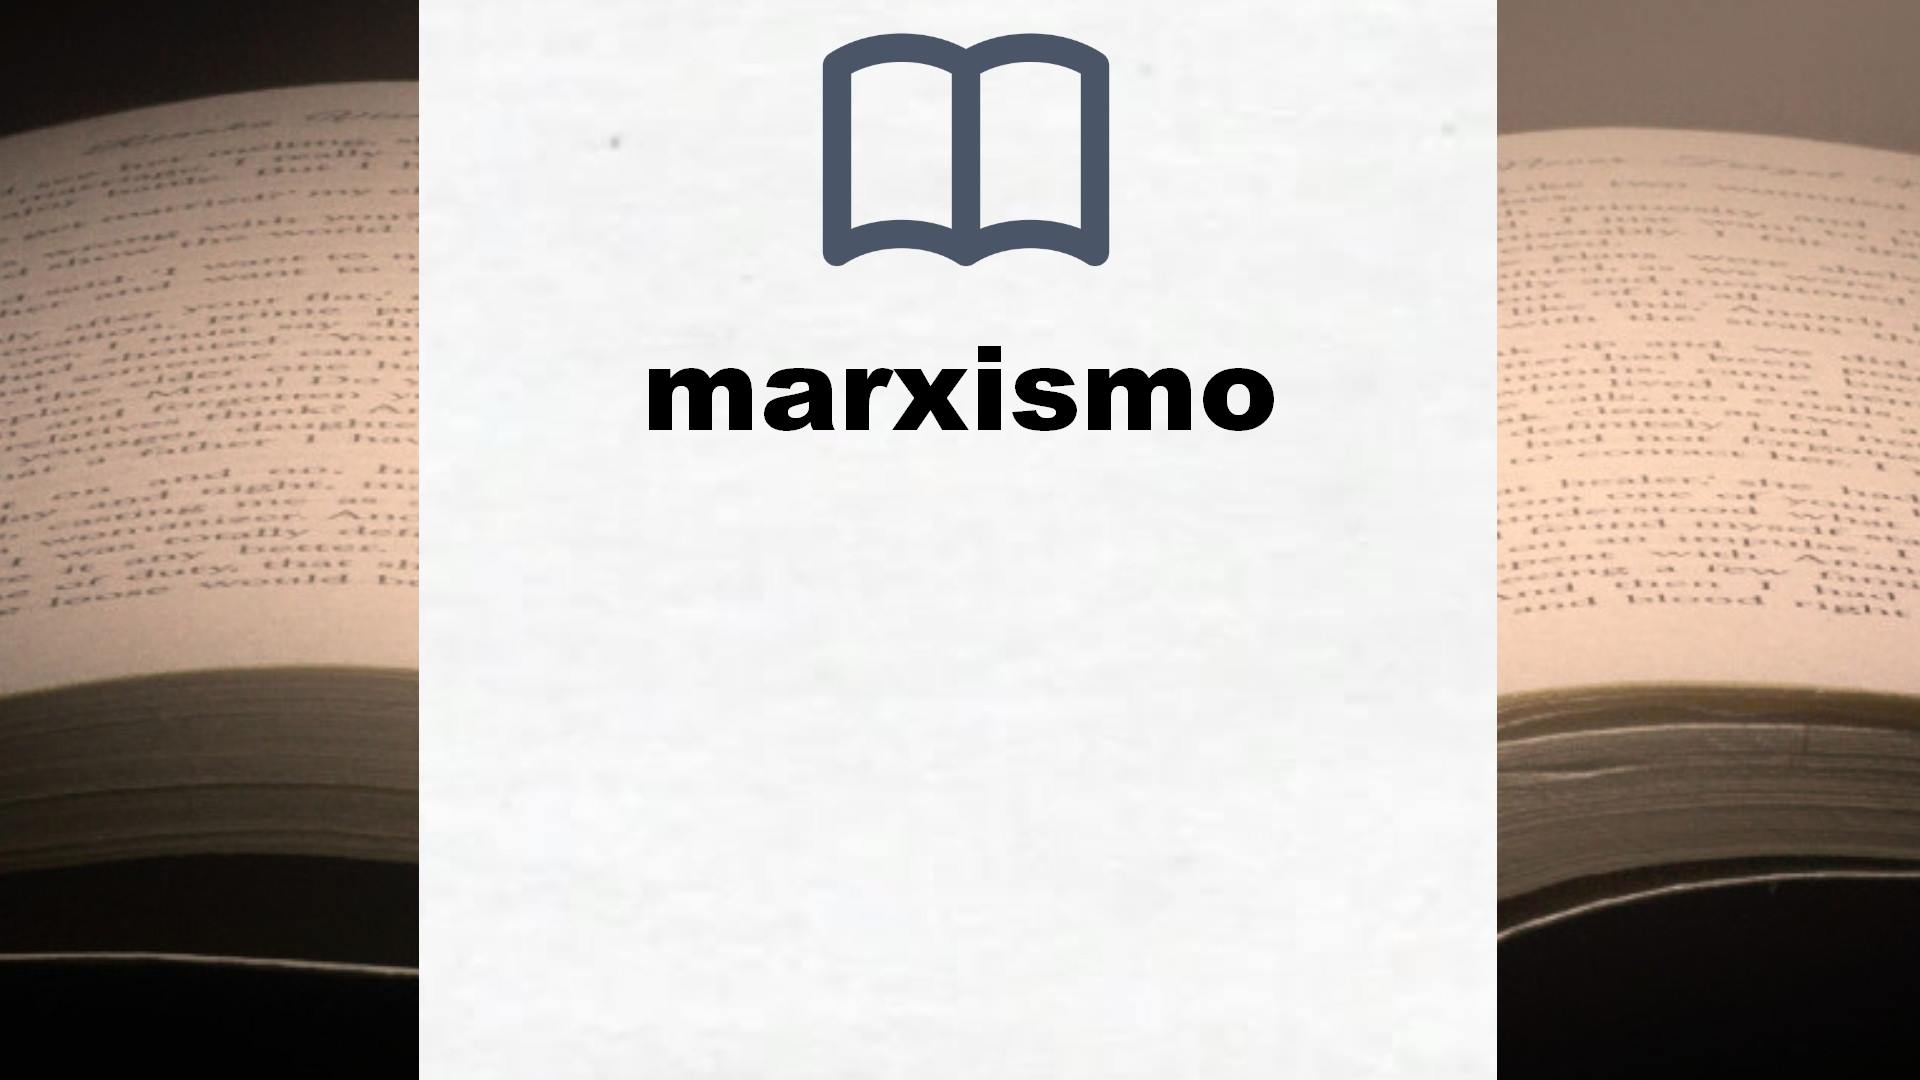 Libros sobre marxismo